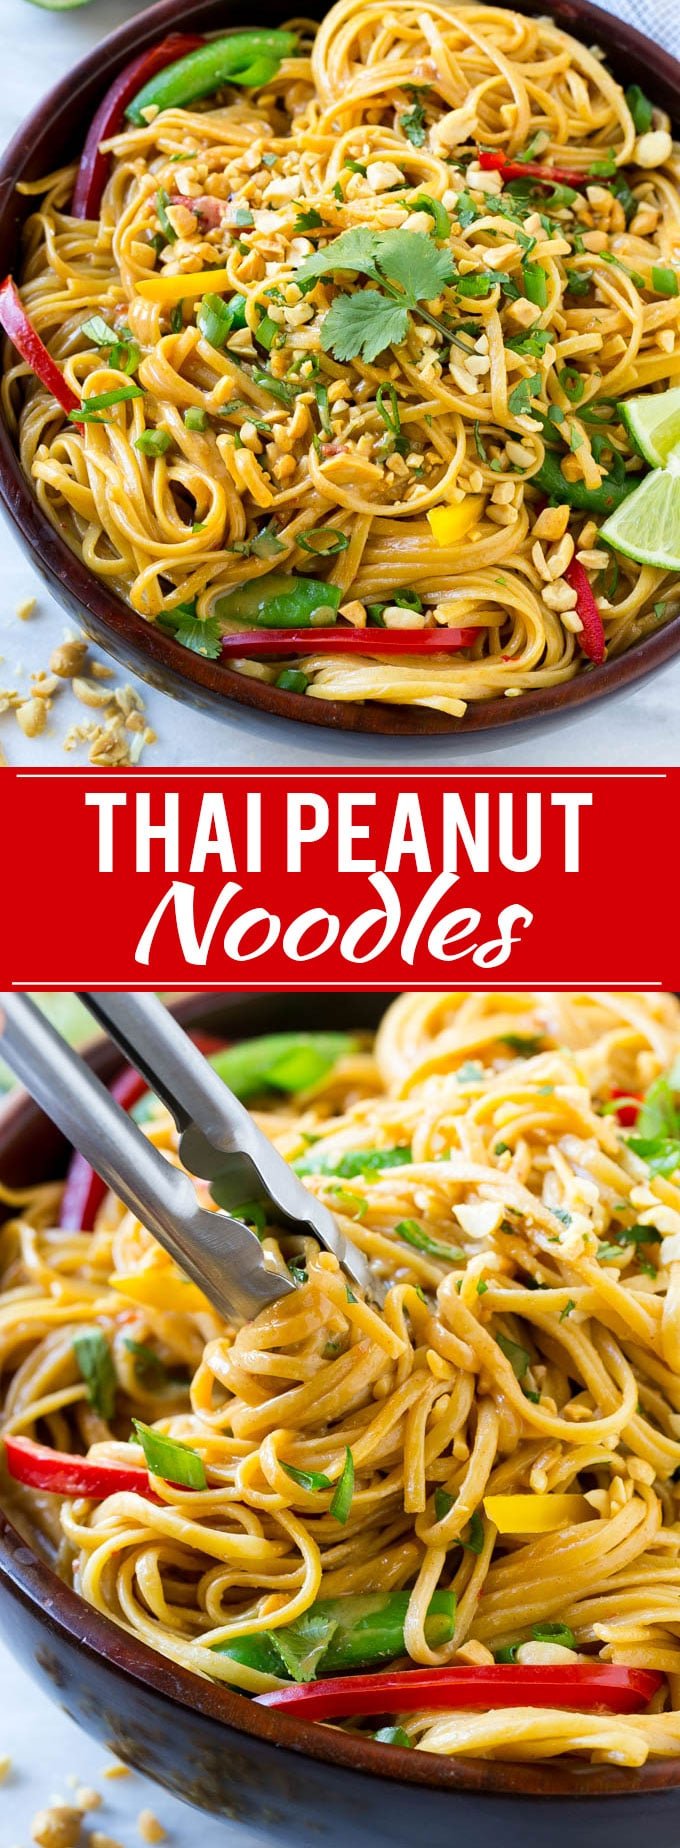 Thai Peanut Noodles Recipe | Asian Noodles | Thai Noodles | Peanut Sauce #noodles #thaifood #peanuts #vegetarian #dinner #lunch #dinneratthezoo